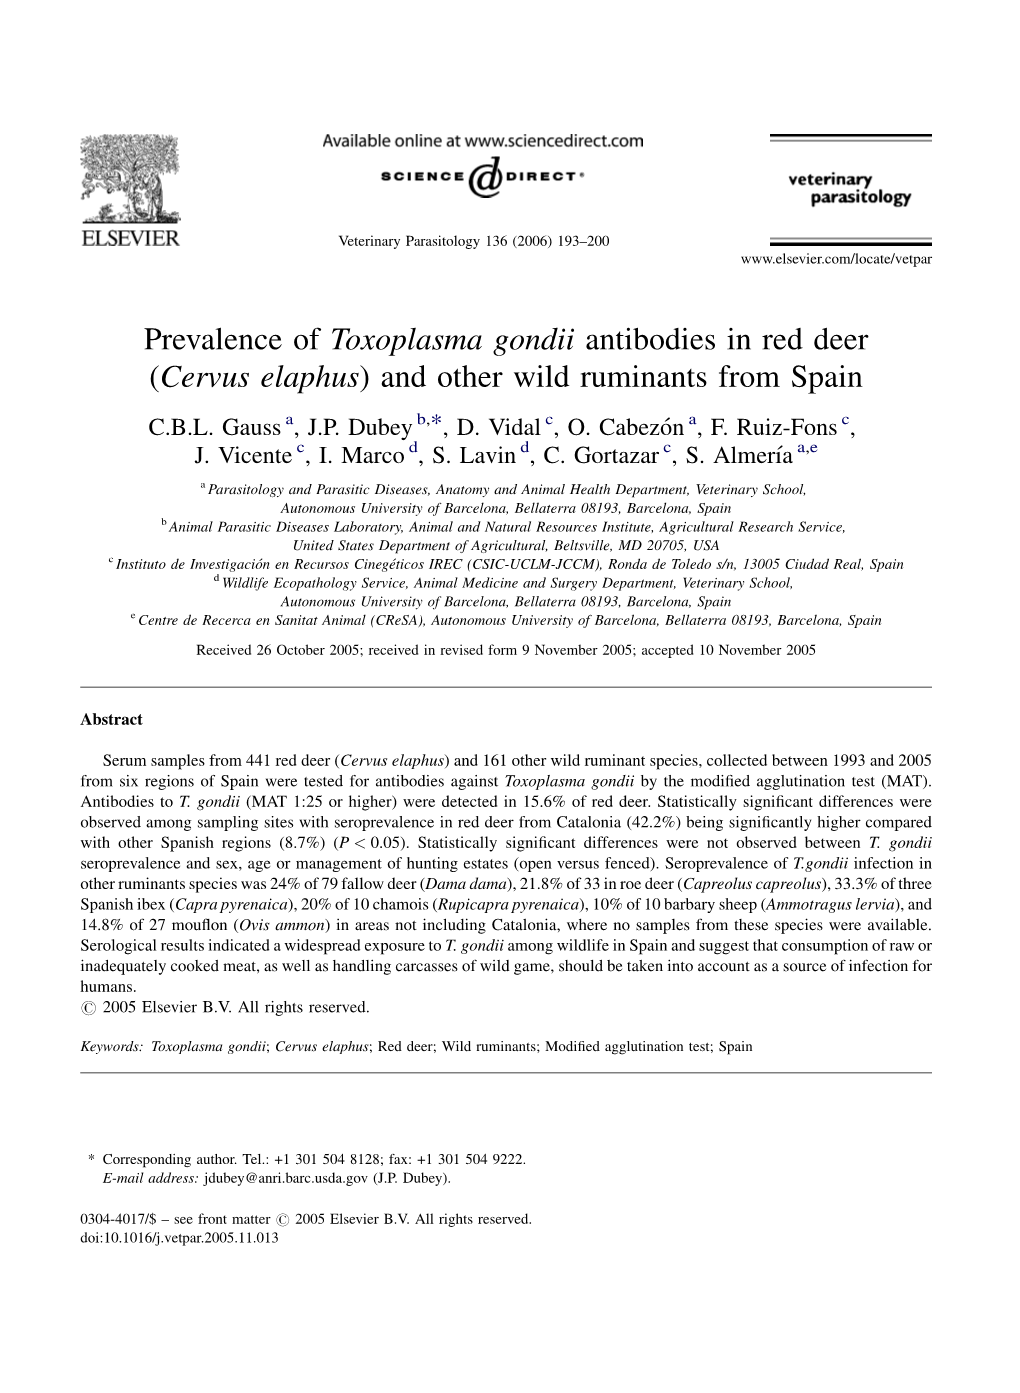 Prevalence of Toxoplasma Gondii Antibodies in Red Deer (Cervus Elaphus) and Other Wild Ruminants from Spain C.B.L